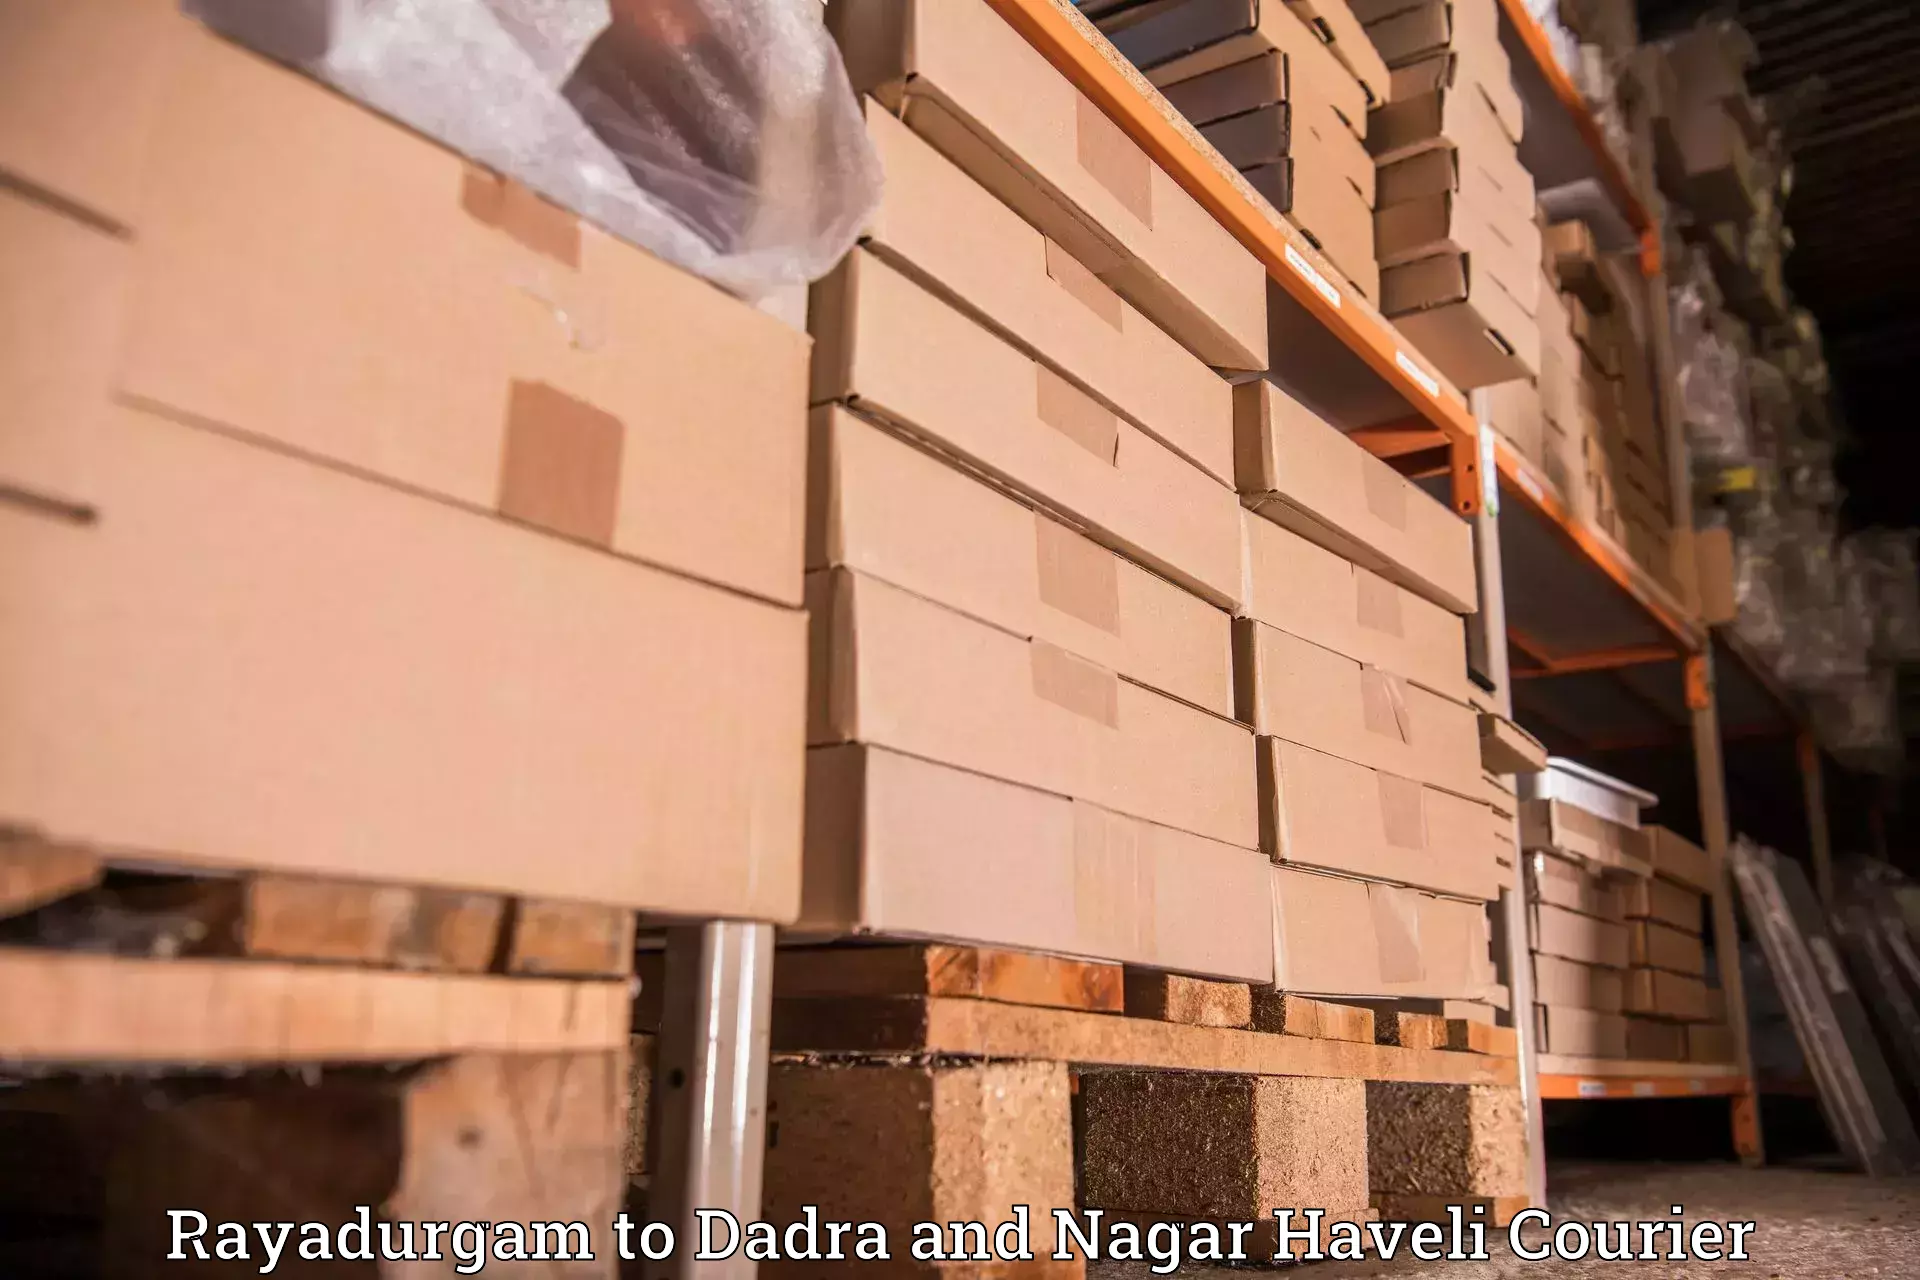 High-performance logistics Rayadurgam to Dadra and Nagar Haveli